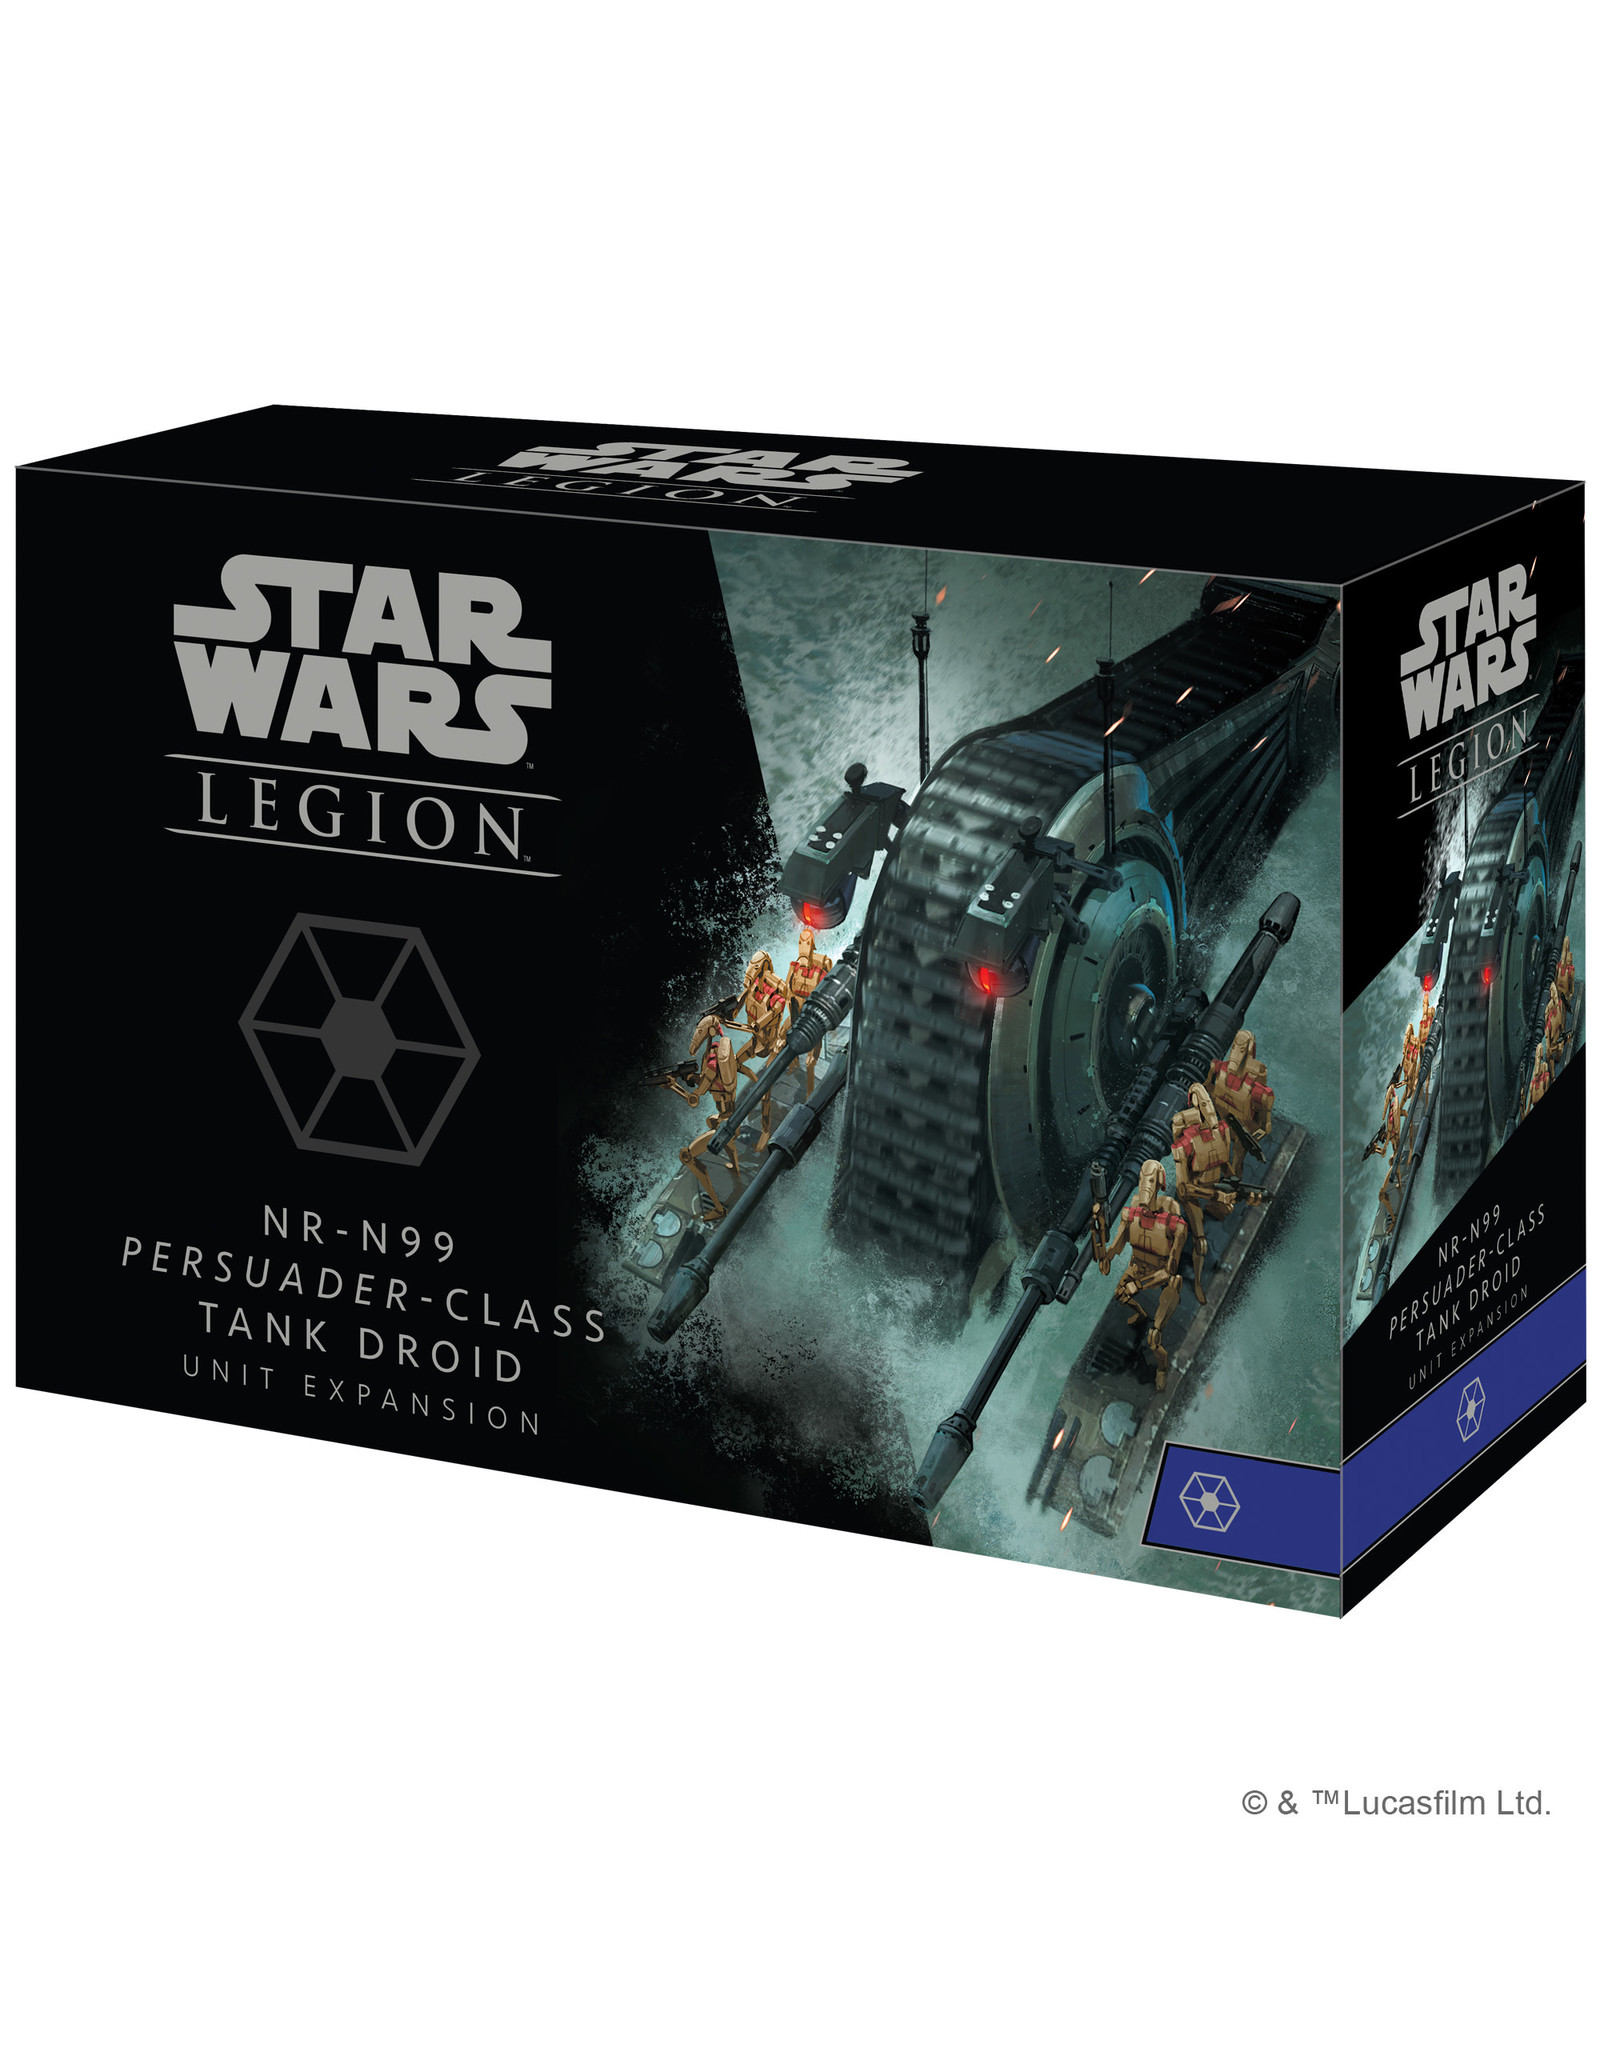 STAR WARS LEGION Star Wars Legion NR-N99 Persuader-Class Tank Droid Unit Expansion